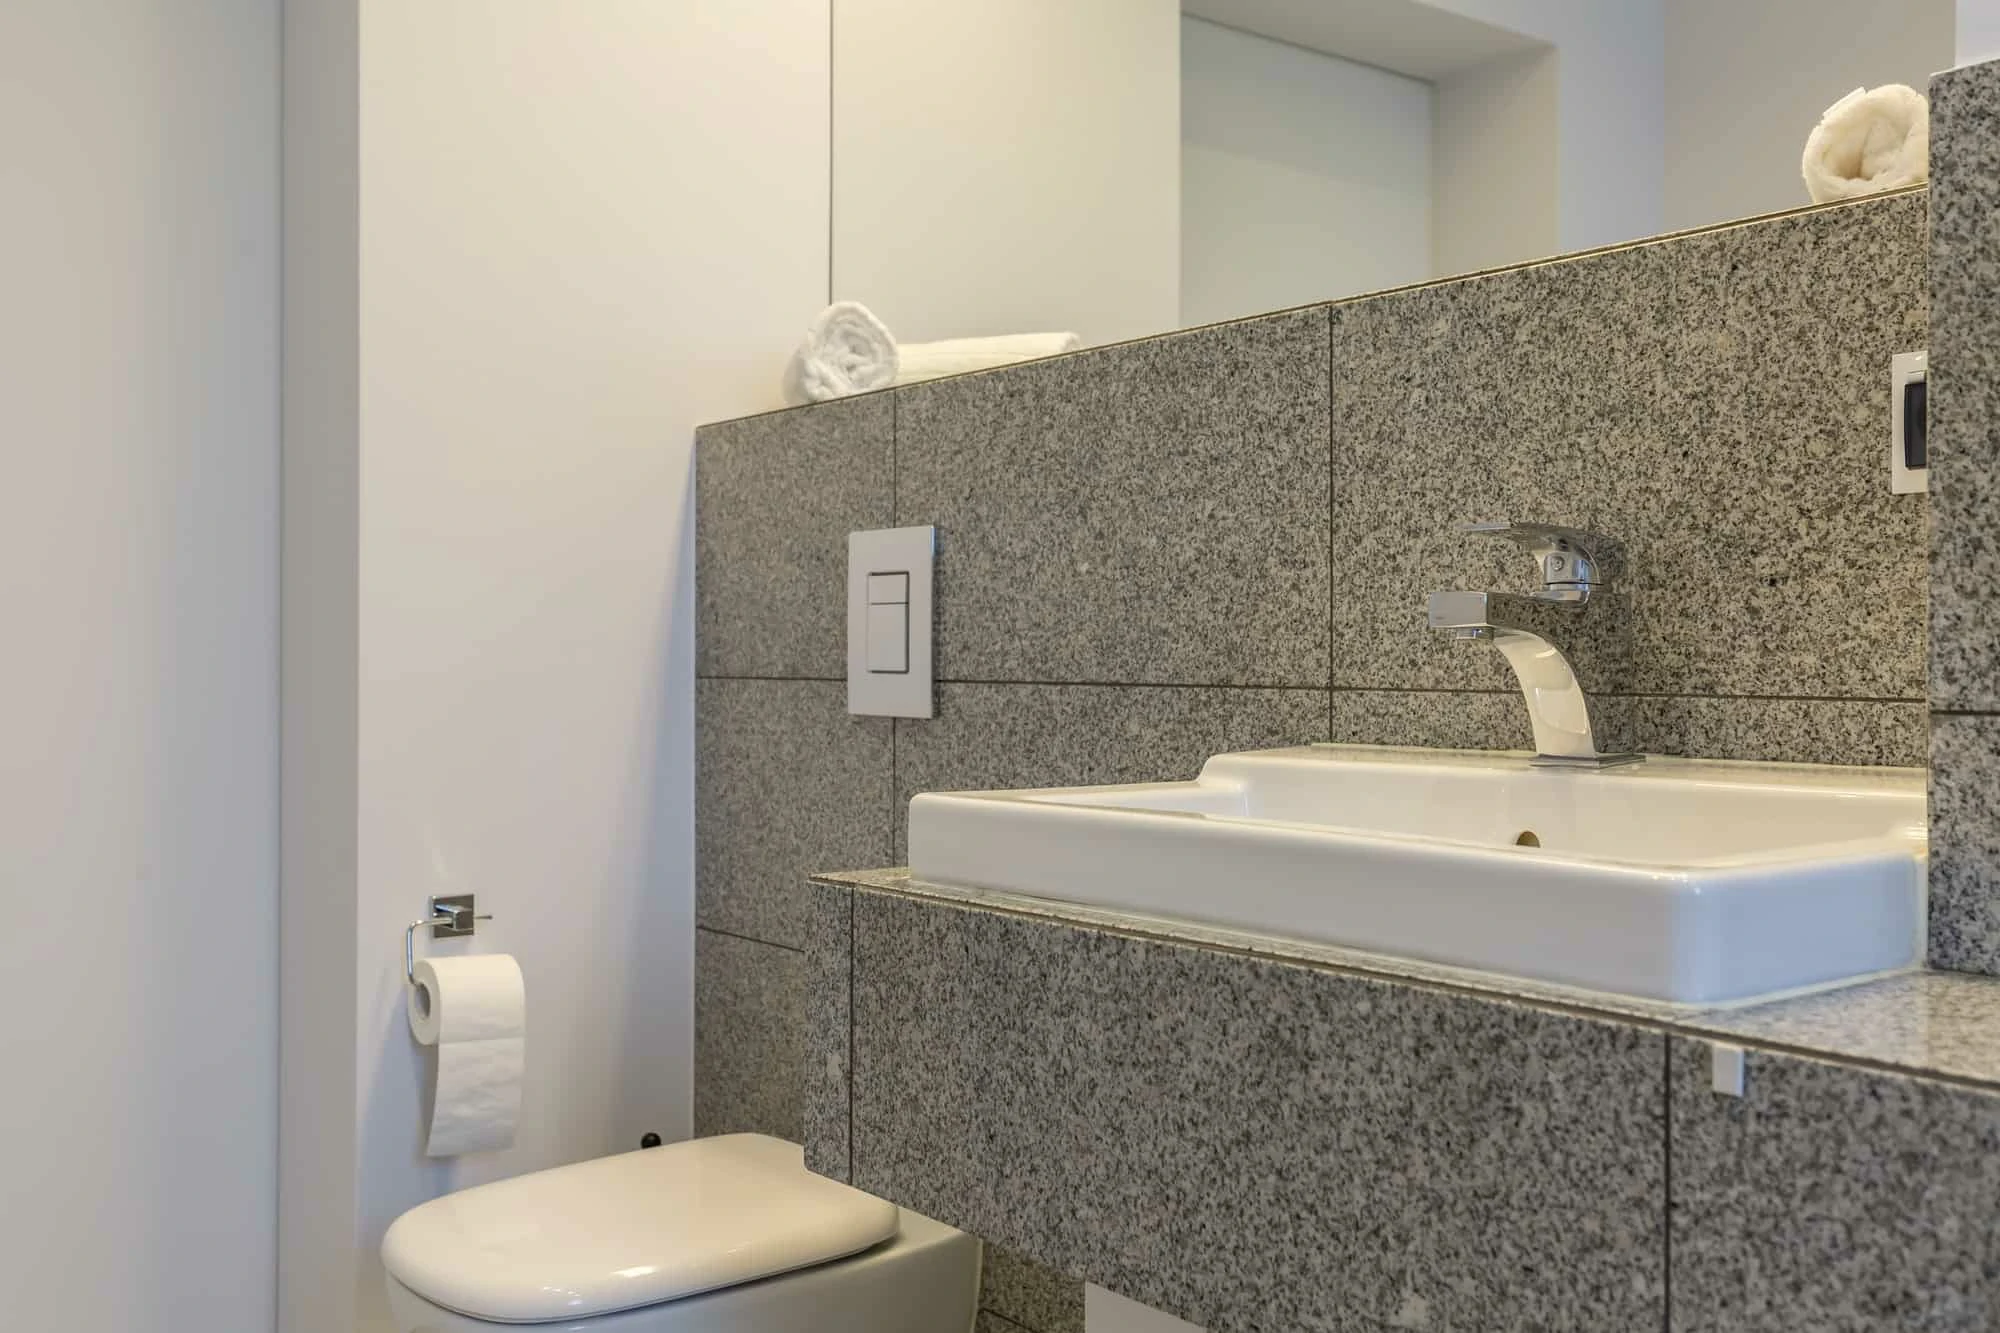 Granite tiles in minimalist bathroom